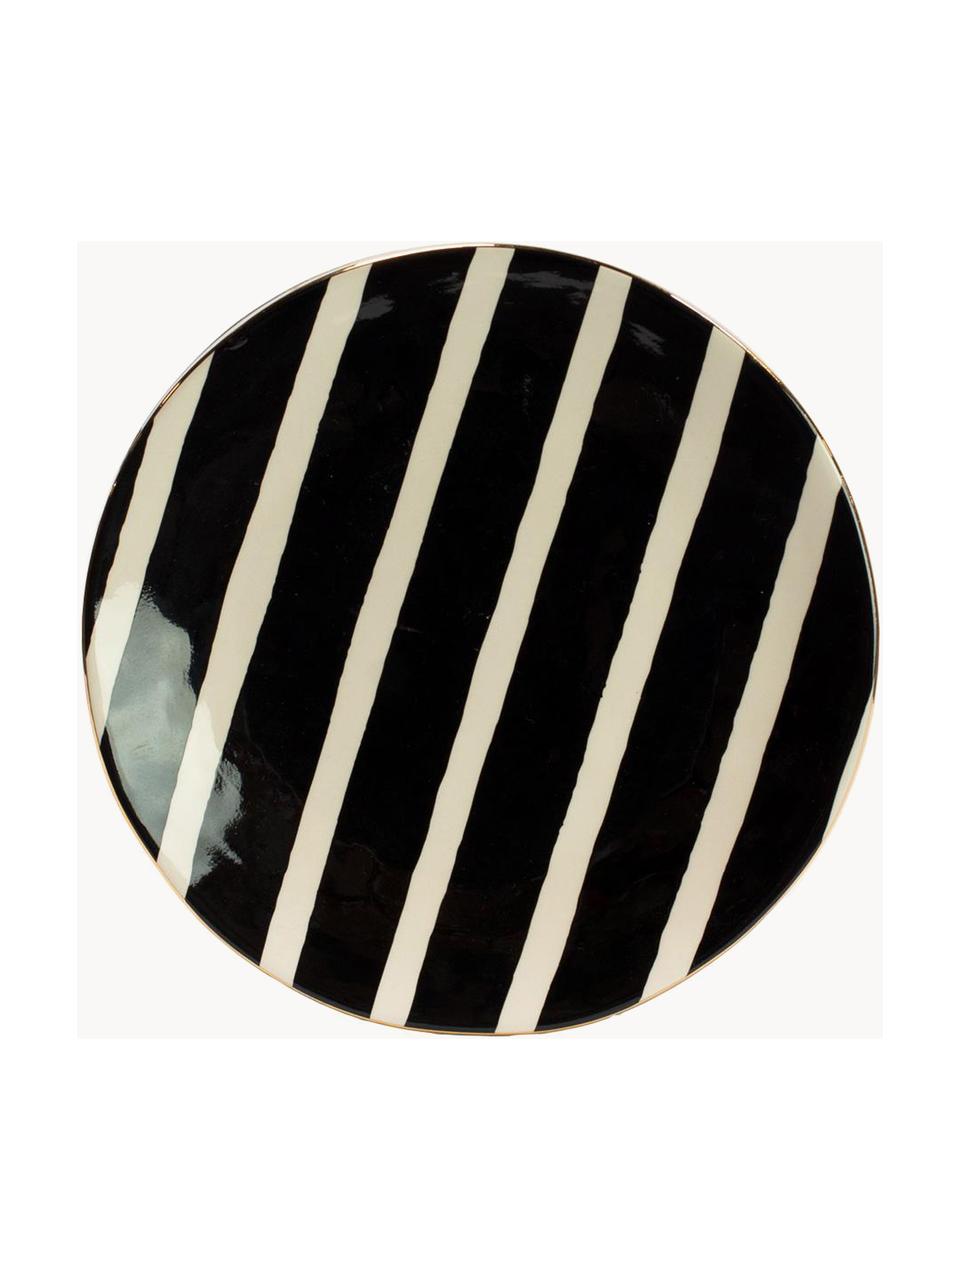 Platos postre Doris, 6 uds., Cerámica, Blanco crema, negro, Ø 21 x Al 2 cm